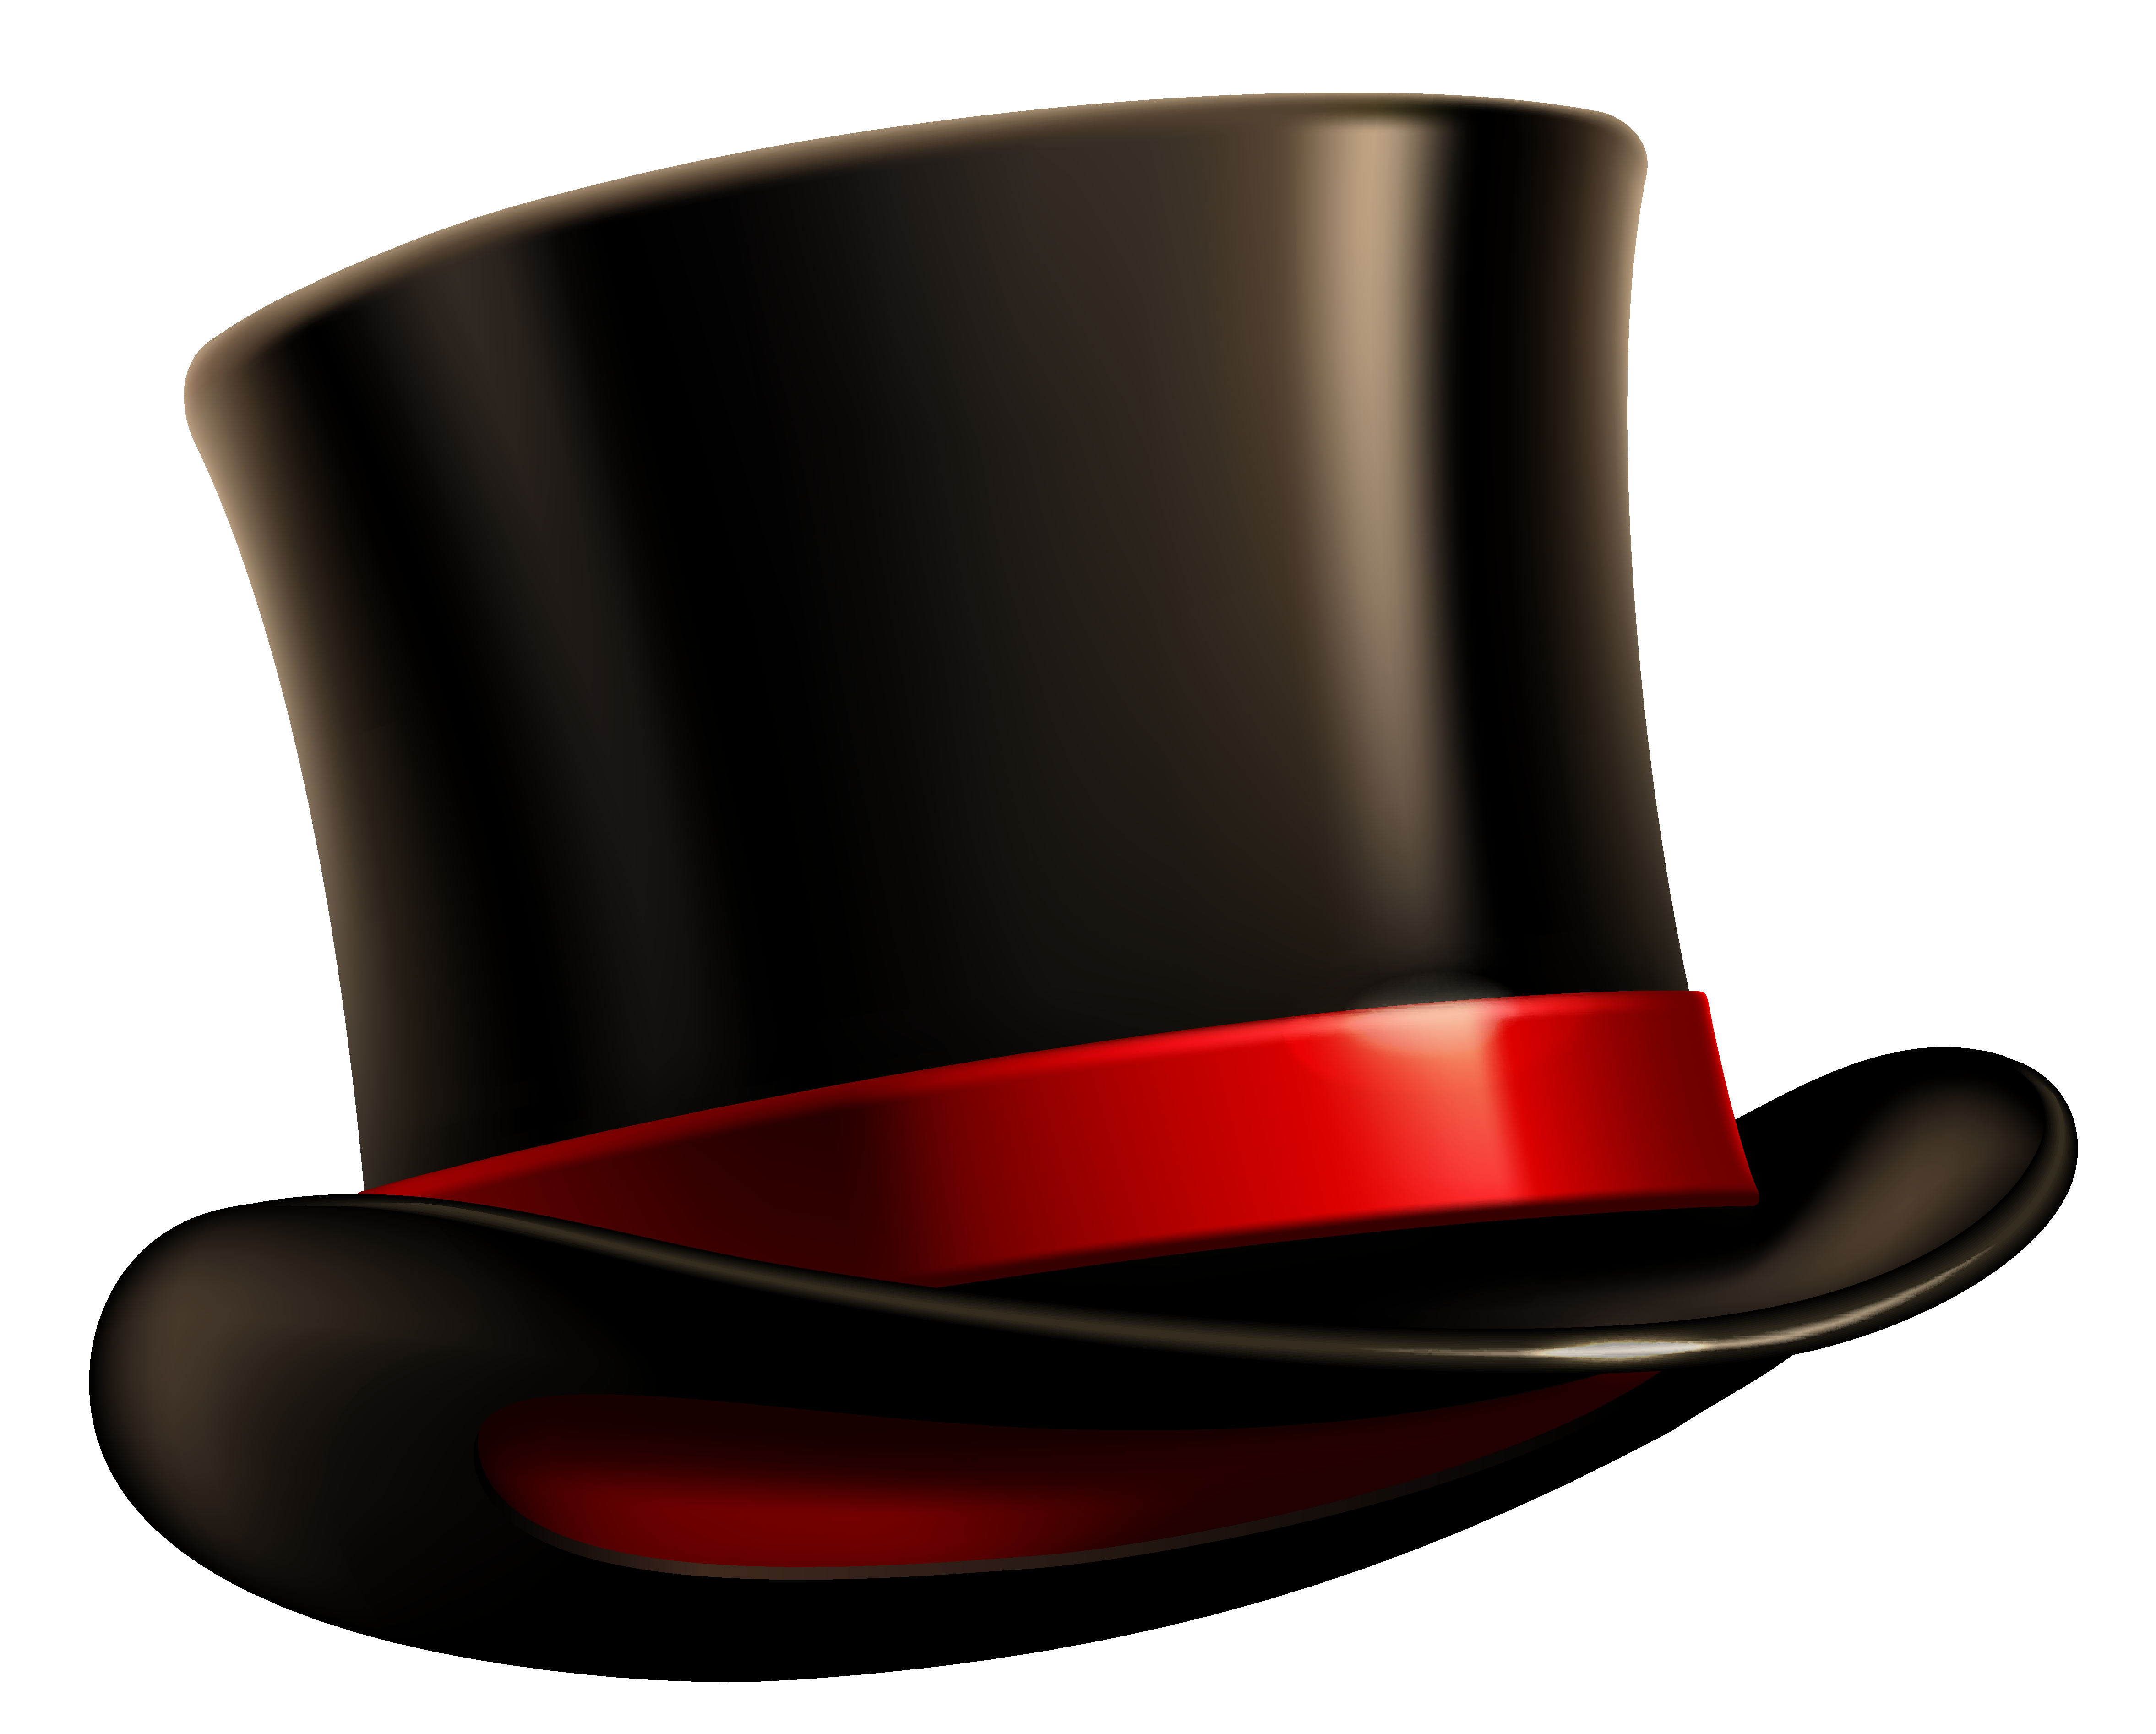 Clipart top hat